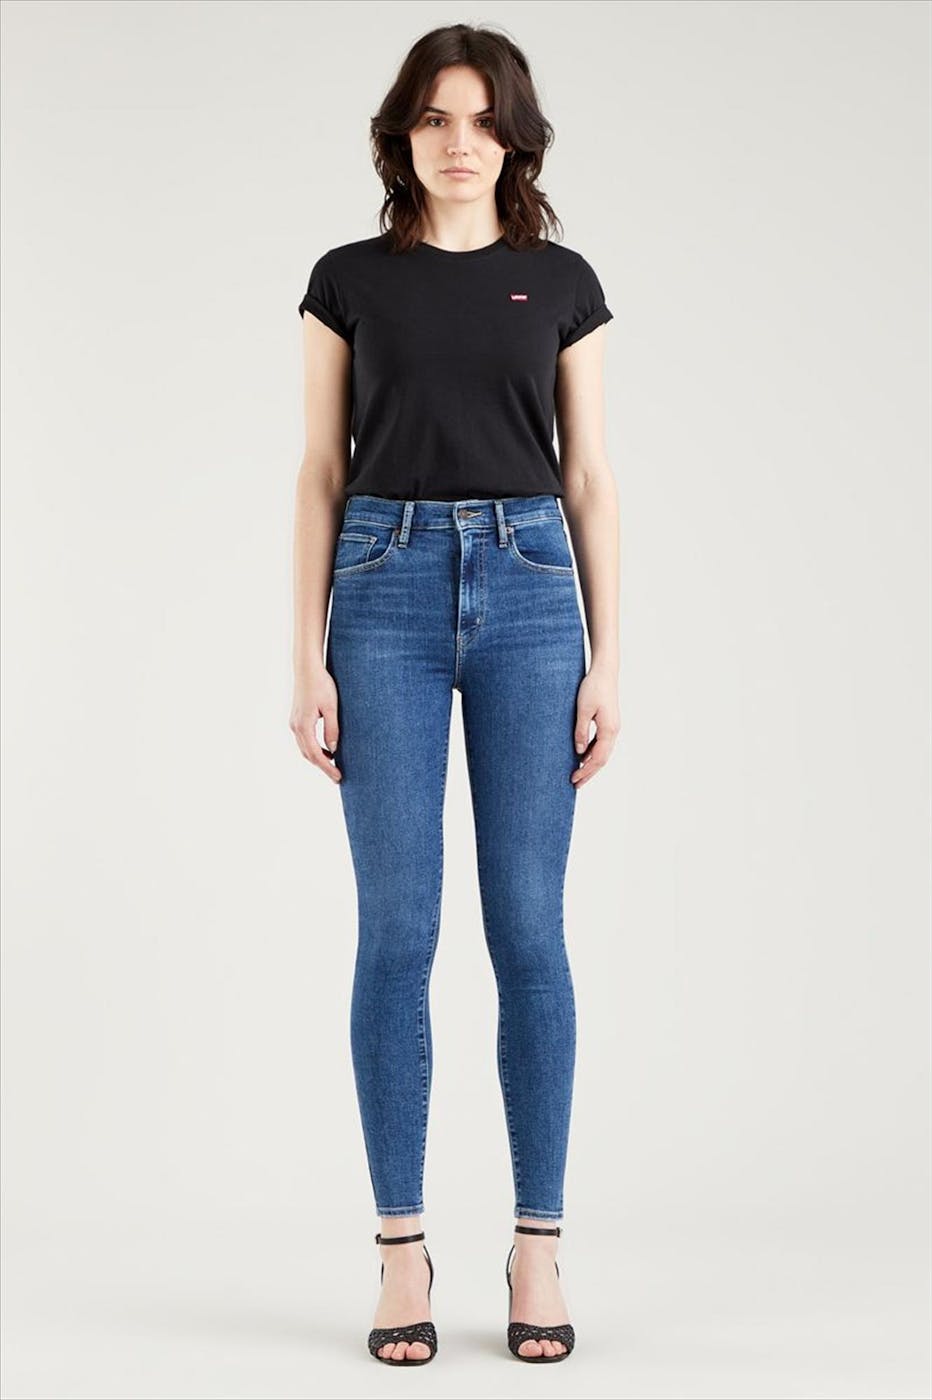 Gespierd Interesseren diep Levi's - Donkerblauwe Mile High Super Skinny jeans